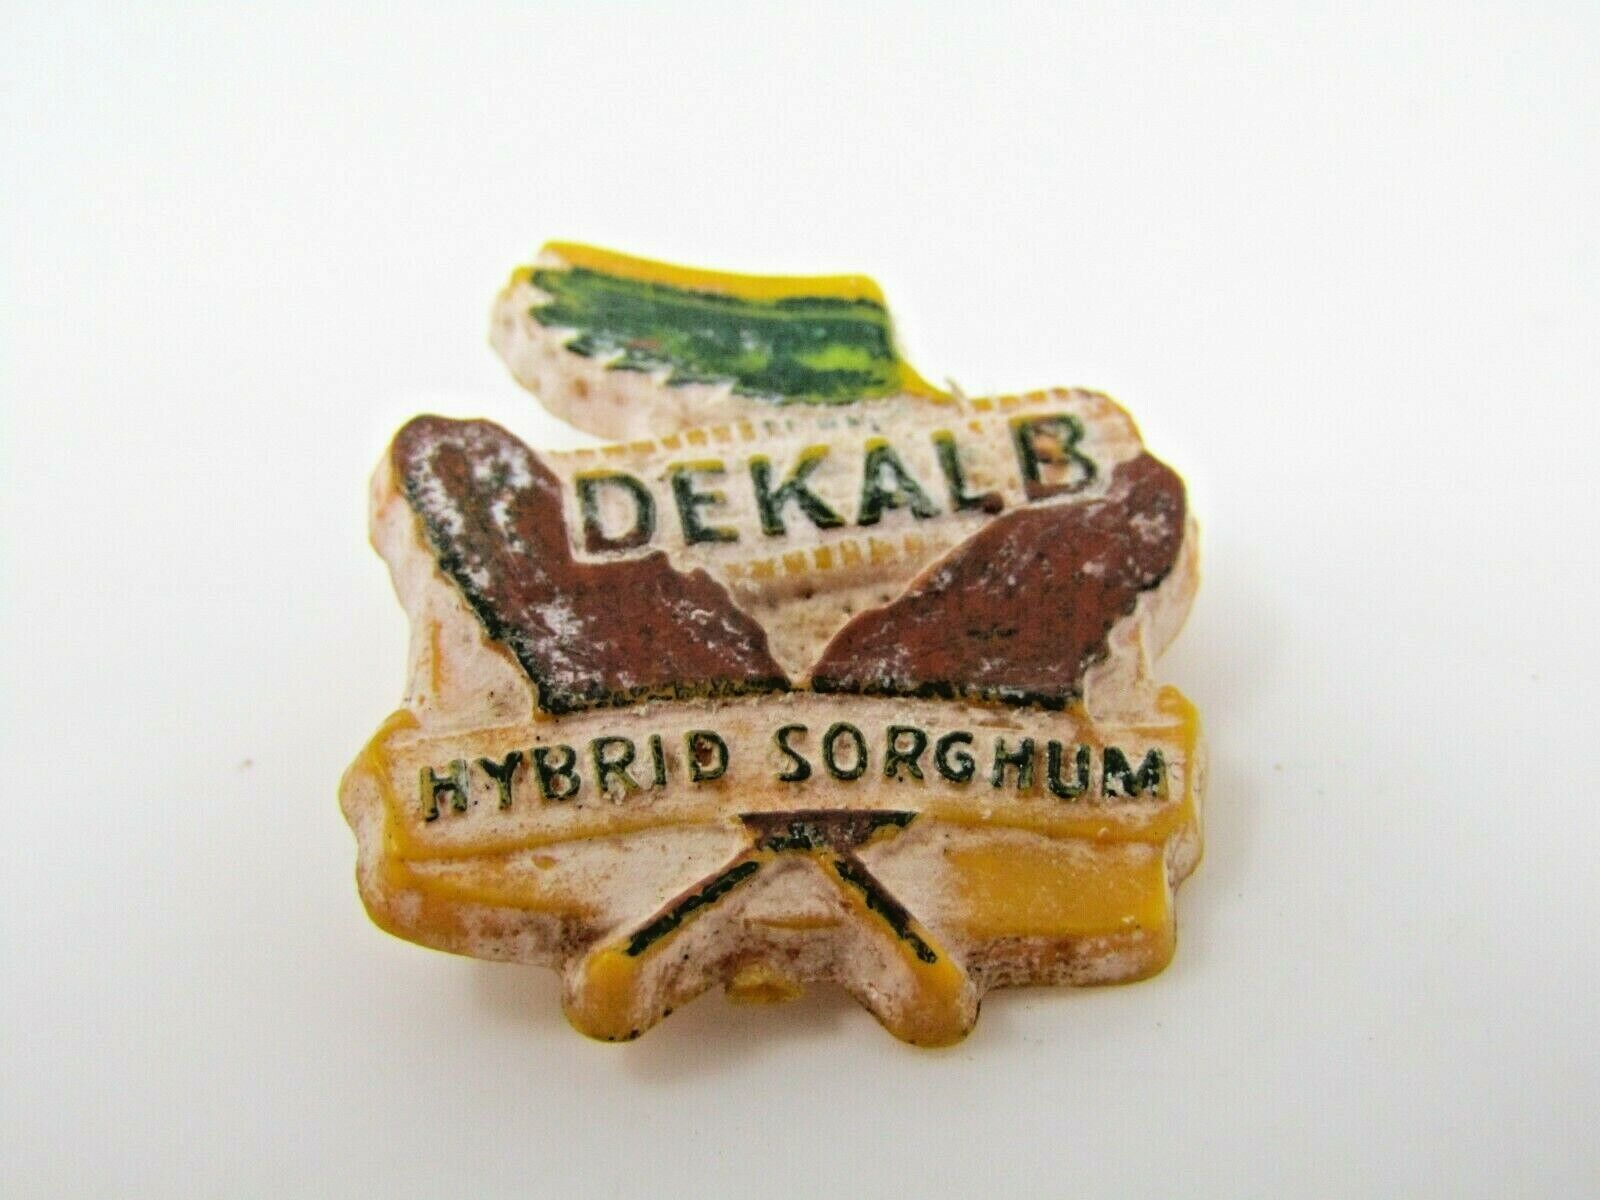 Dekalb Hybrid Sorghum Pin Vintage Collectible 